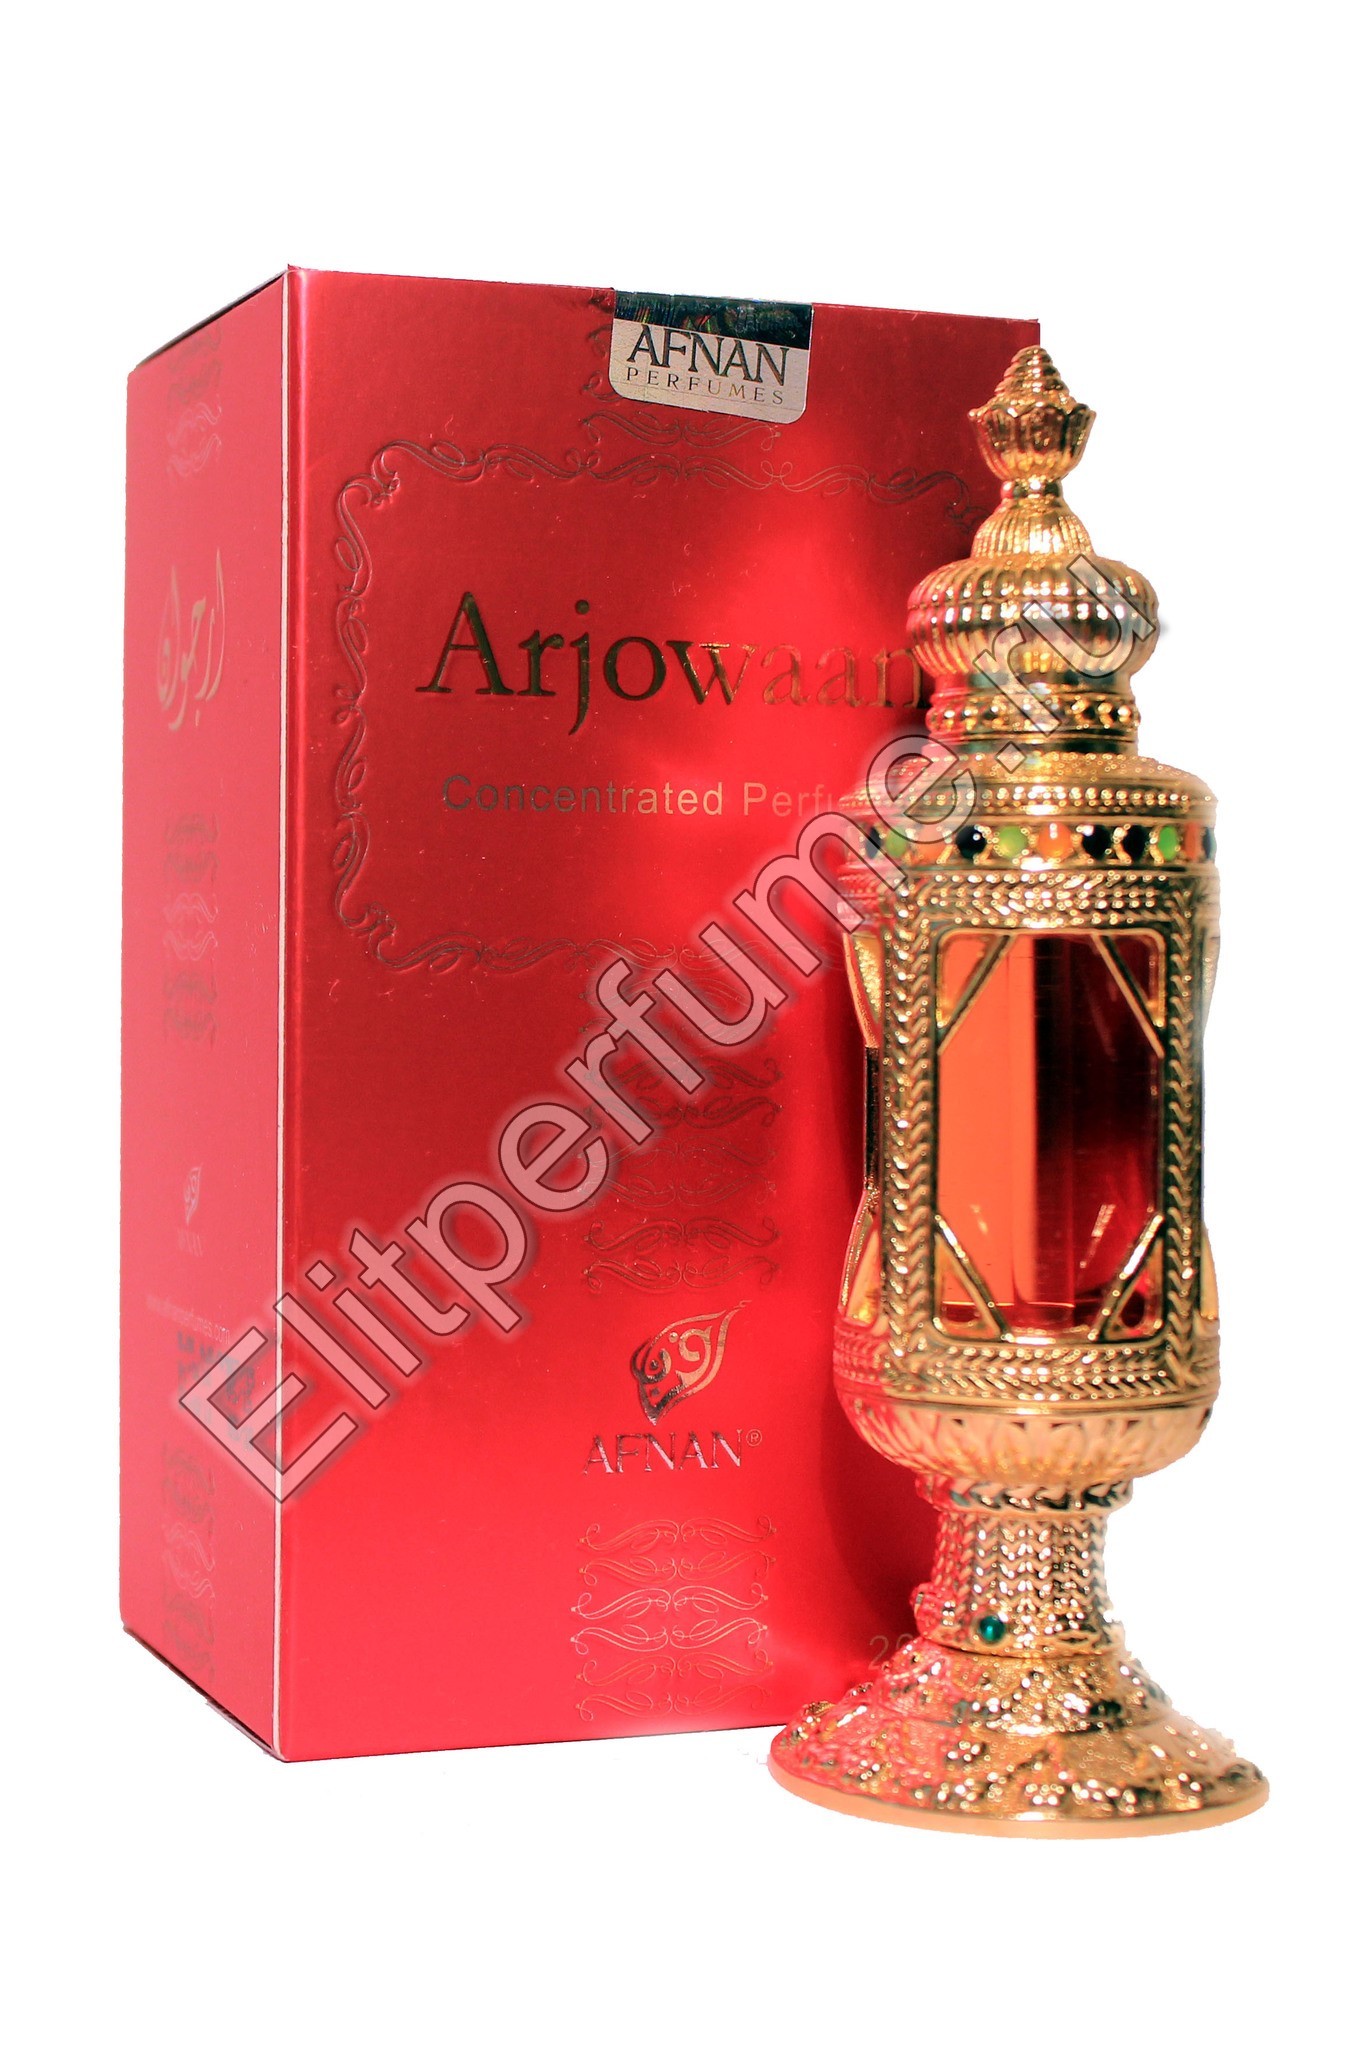 Arjowaan  Арджуван 20 мл арабские масляные духи от Афнан Парфюм Afnan Perfumes